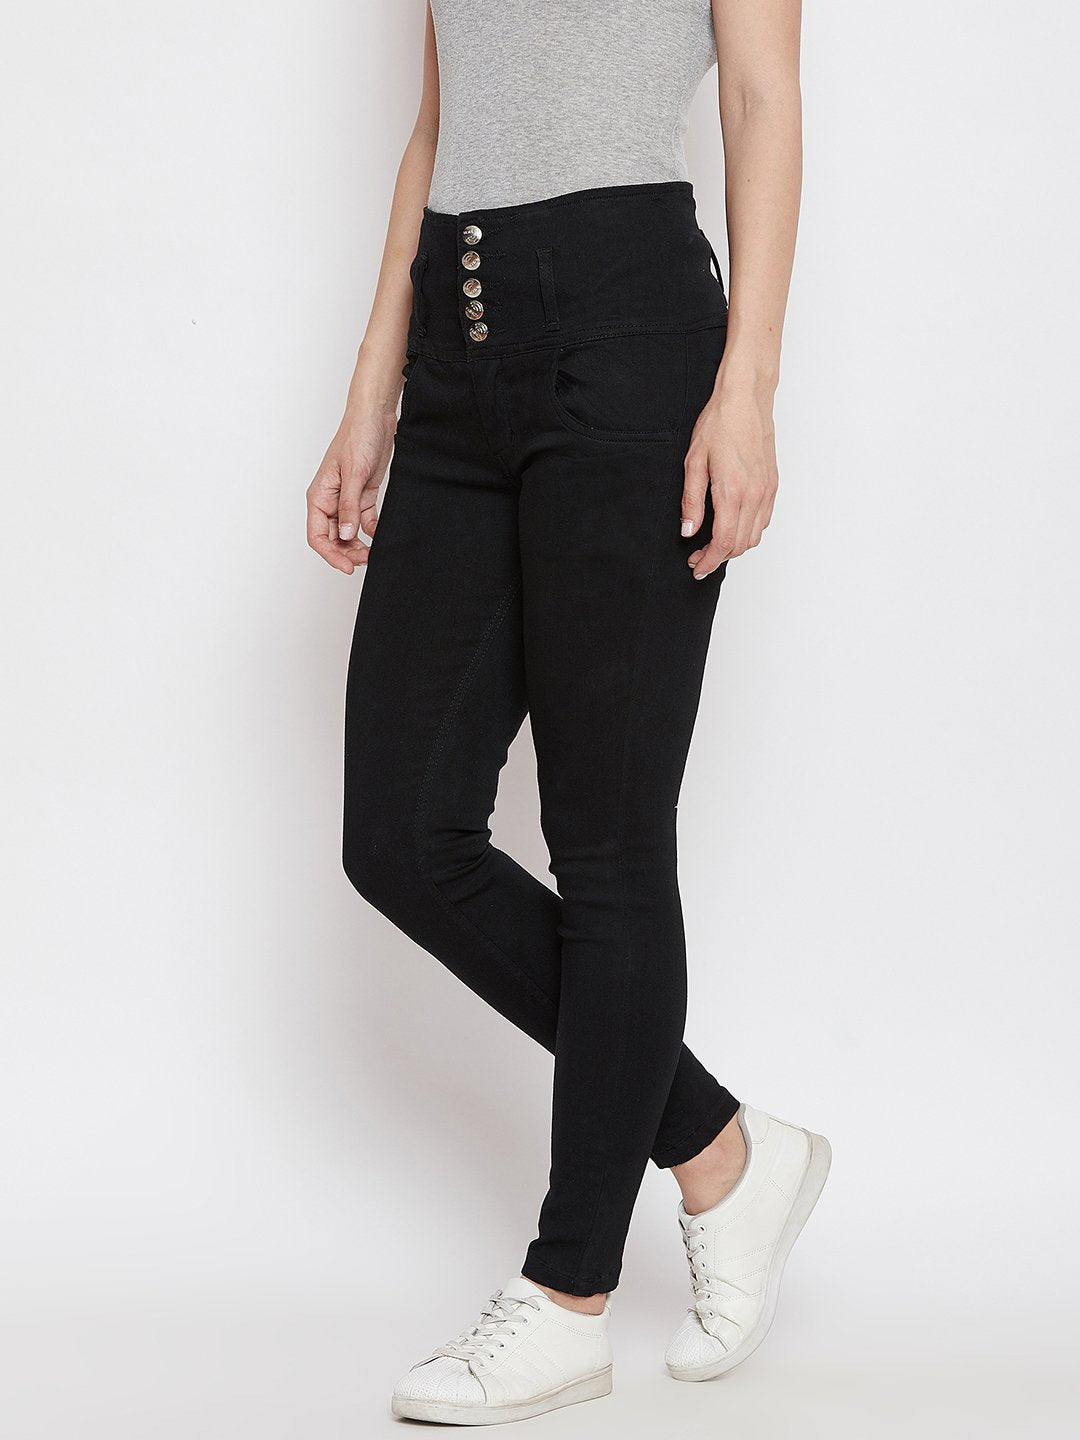 High Waist 5 button Black Jeans - NiftyJeans